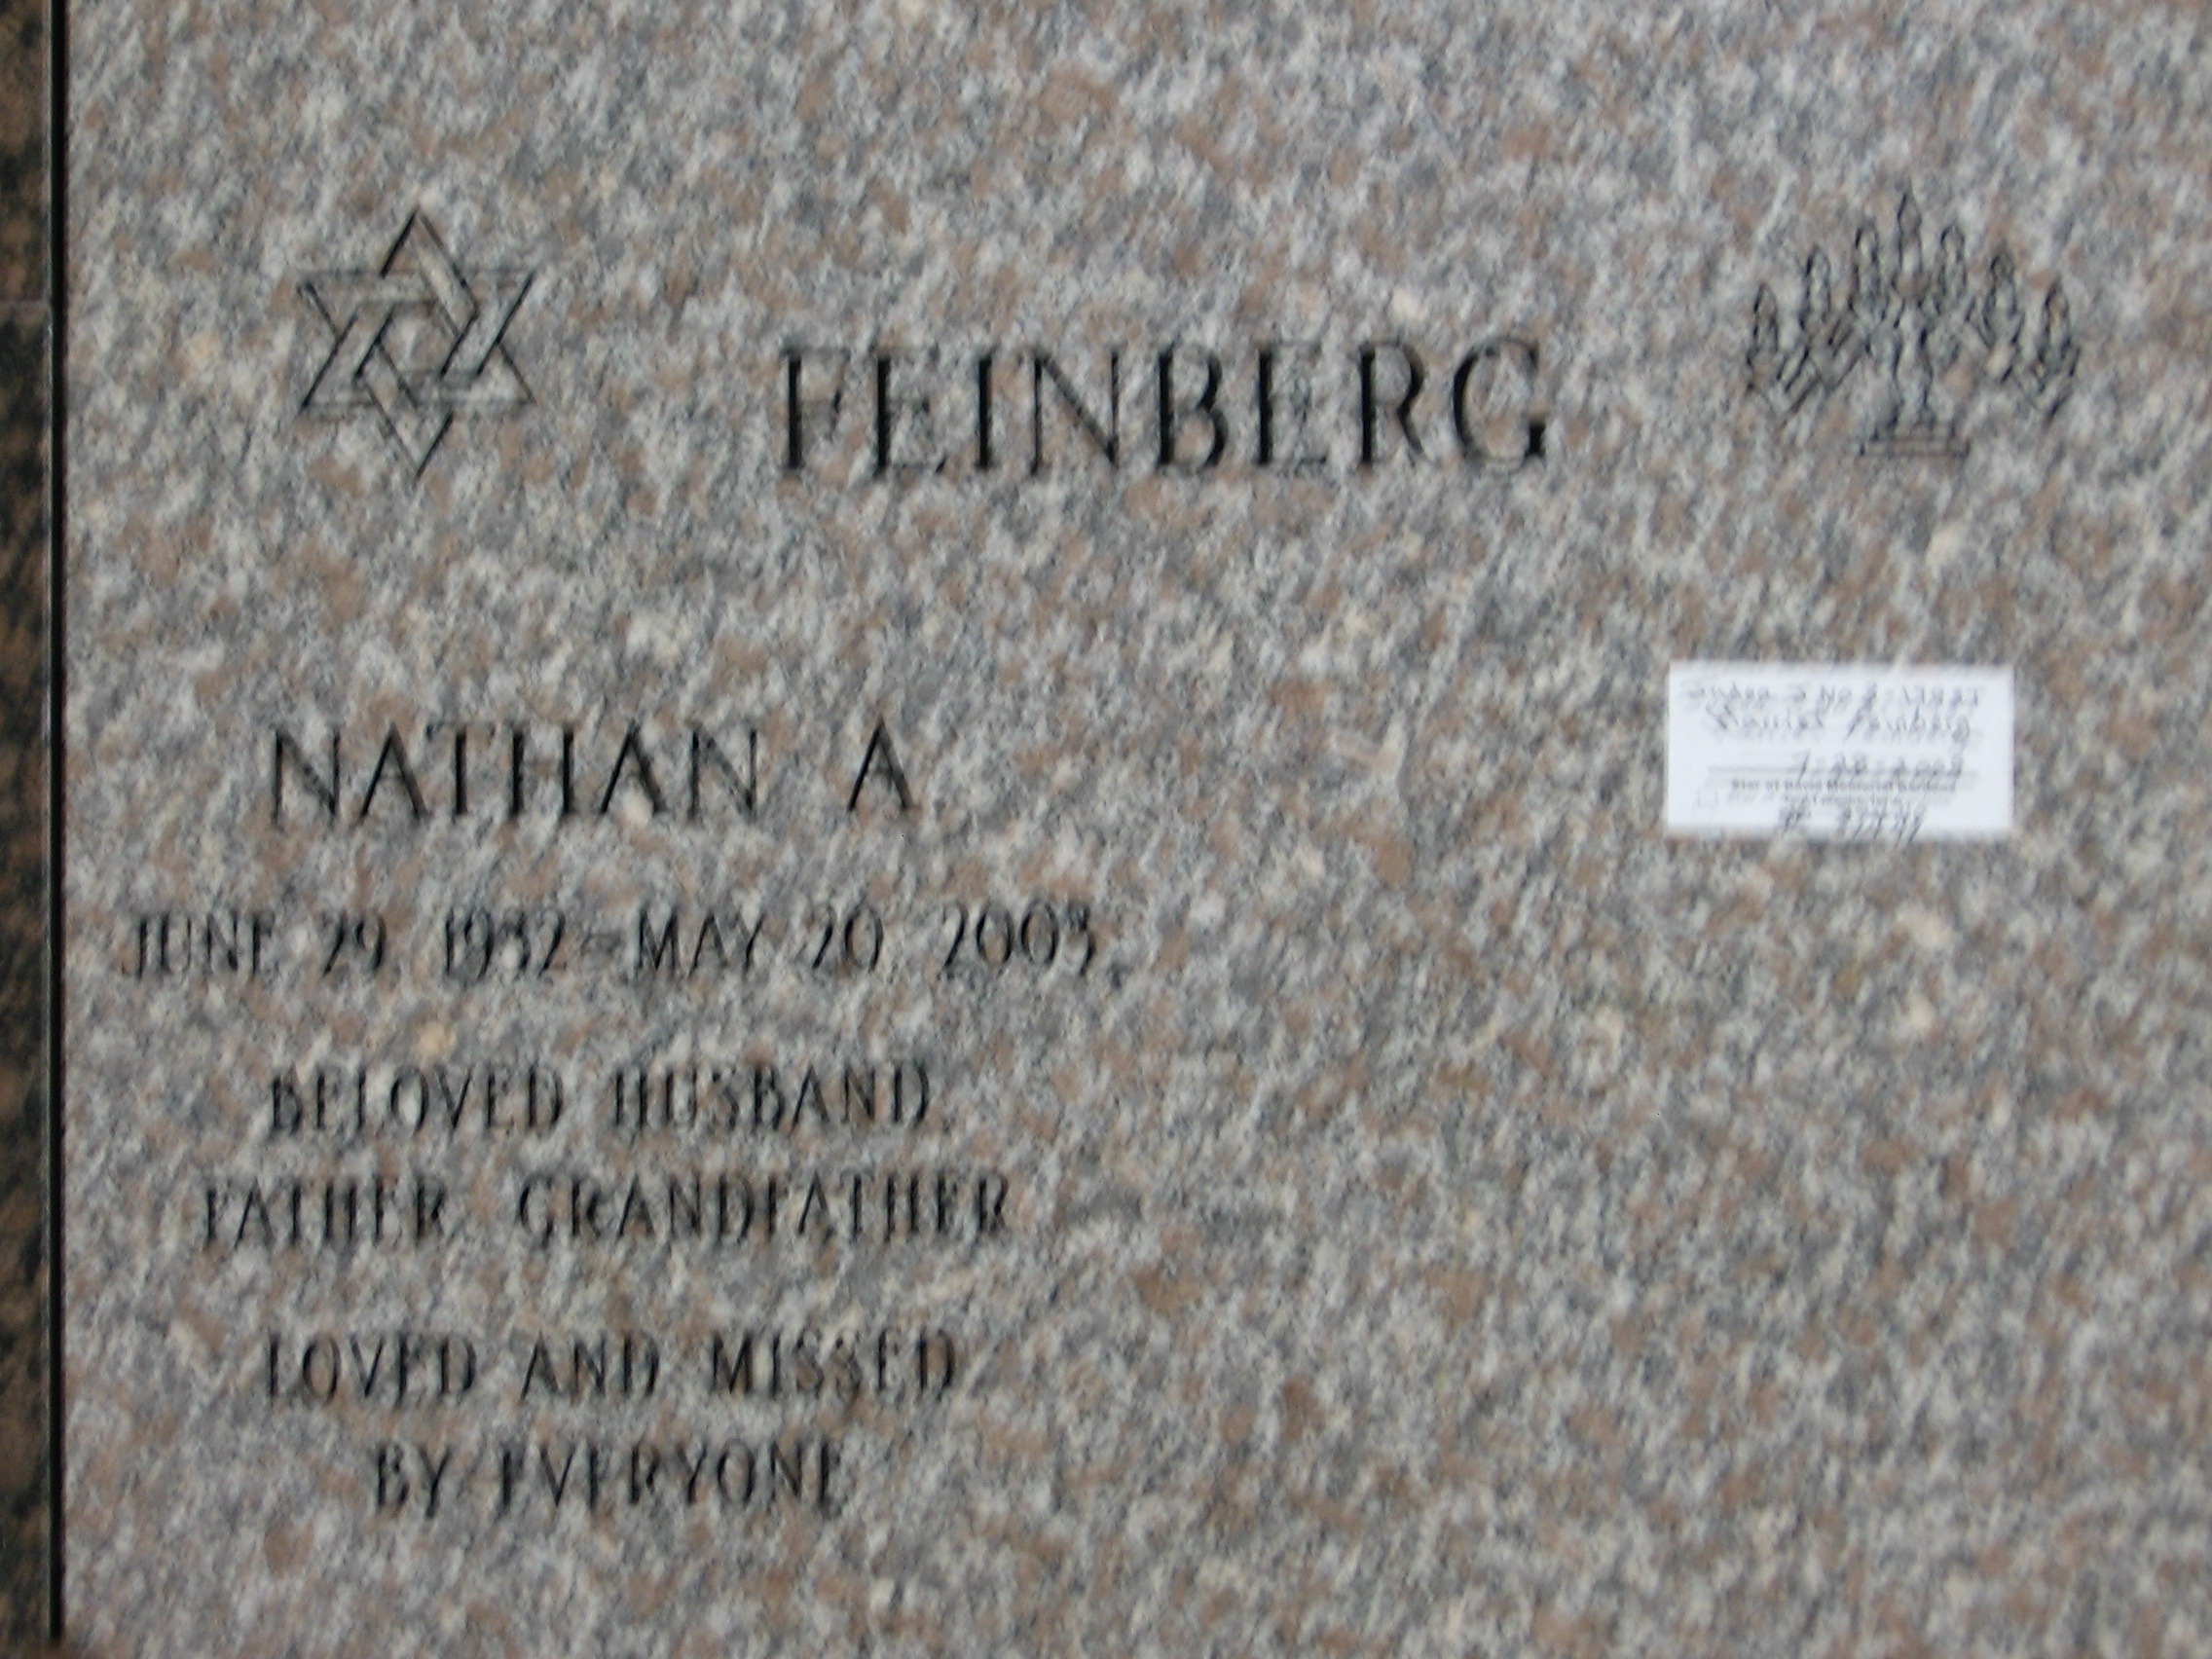 Nathan A Feinberg